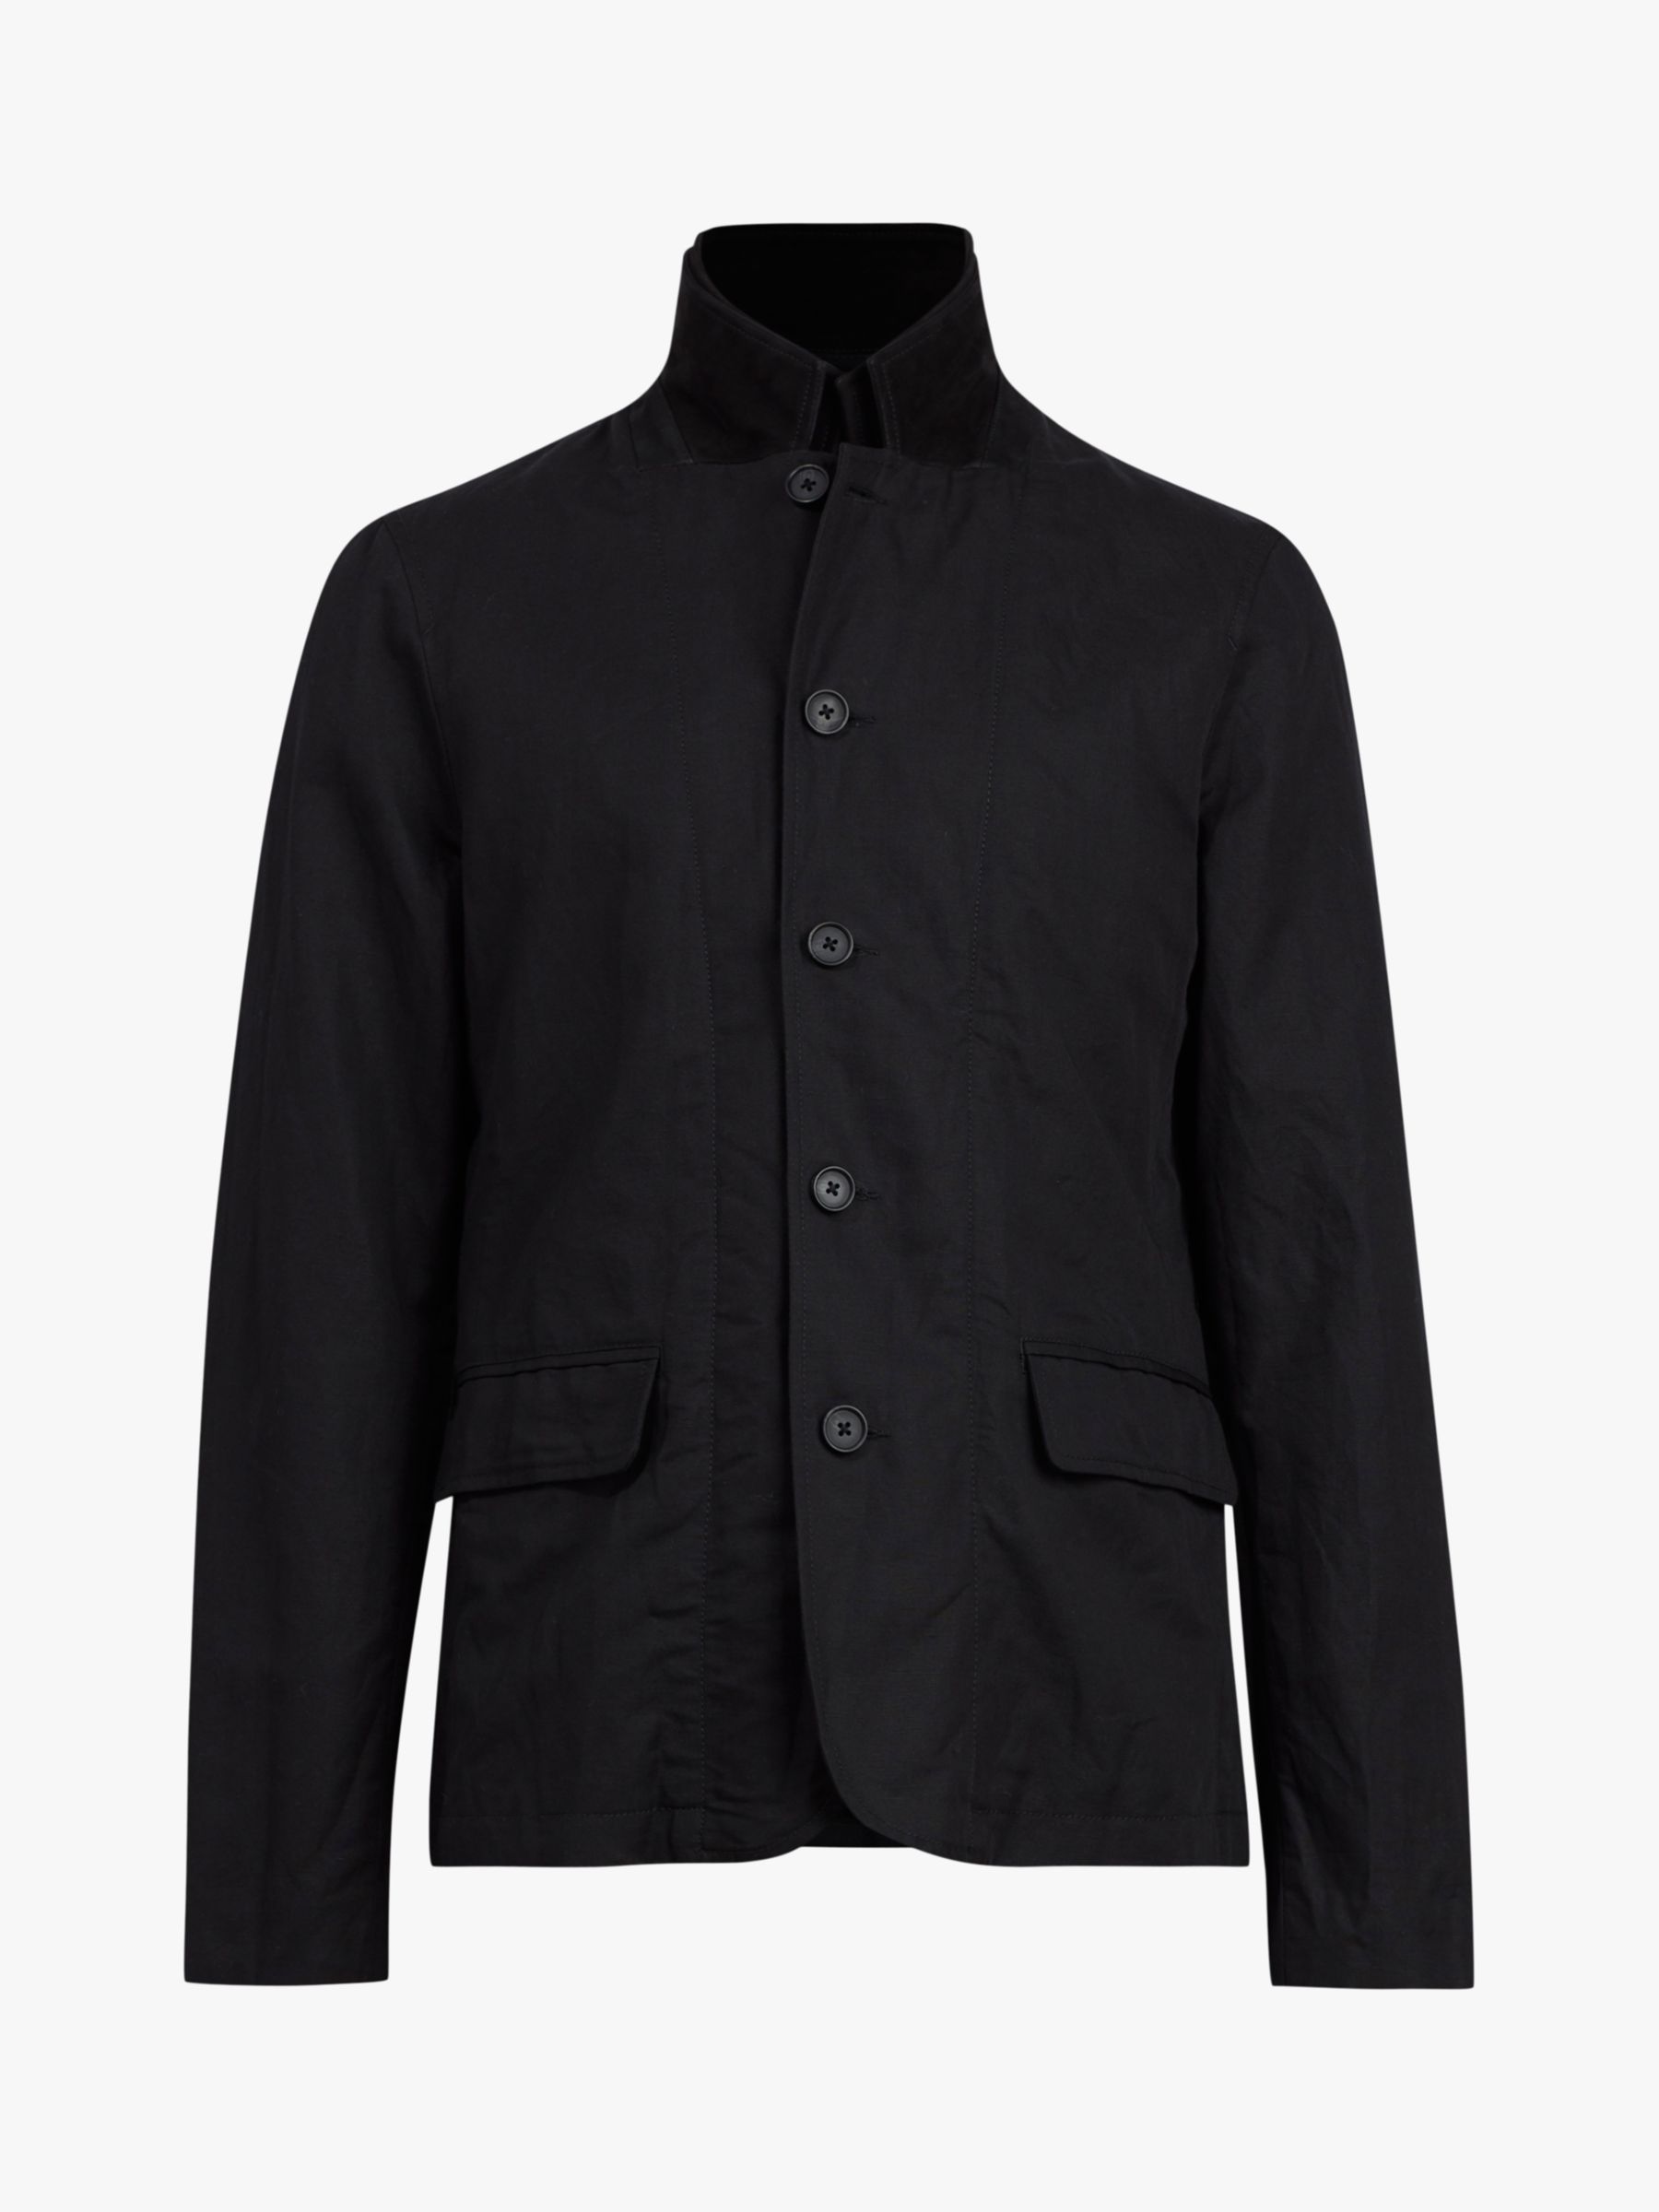 AllSaints Dunn Leather Trim Blazer, Black at John Lewis & Partners